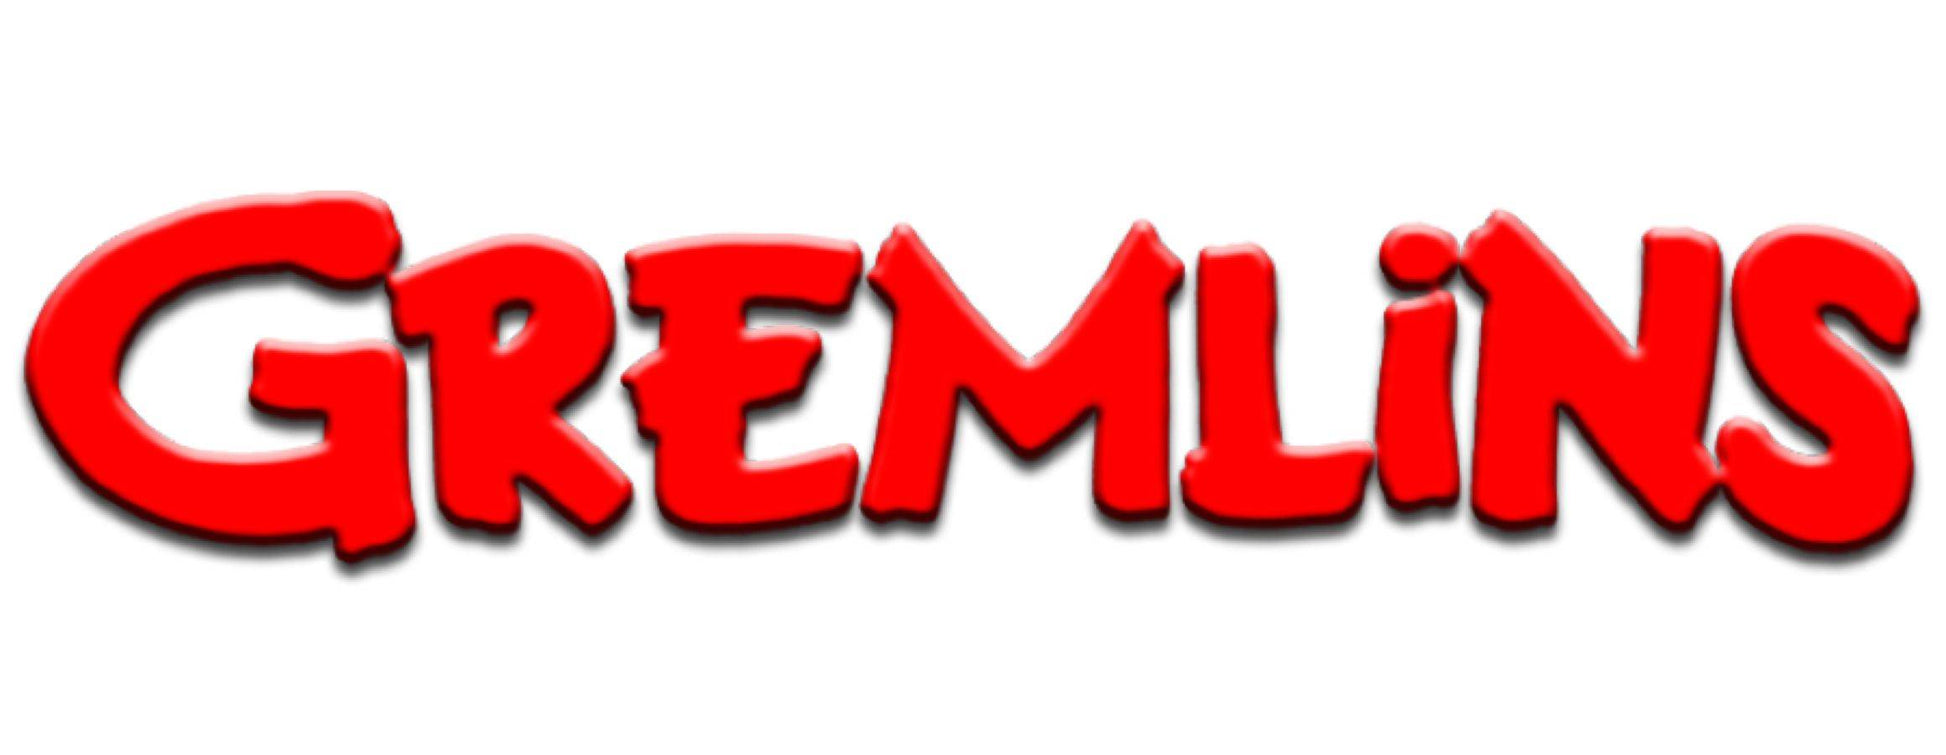 Gremlins 2 - Daffy Prop Replica